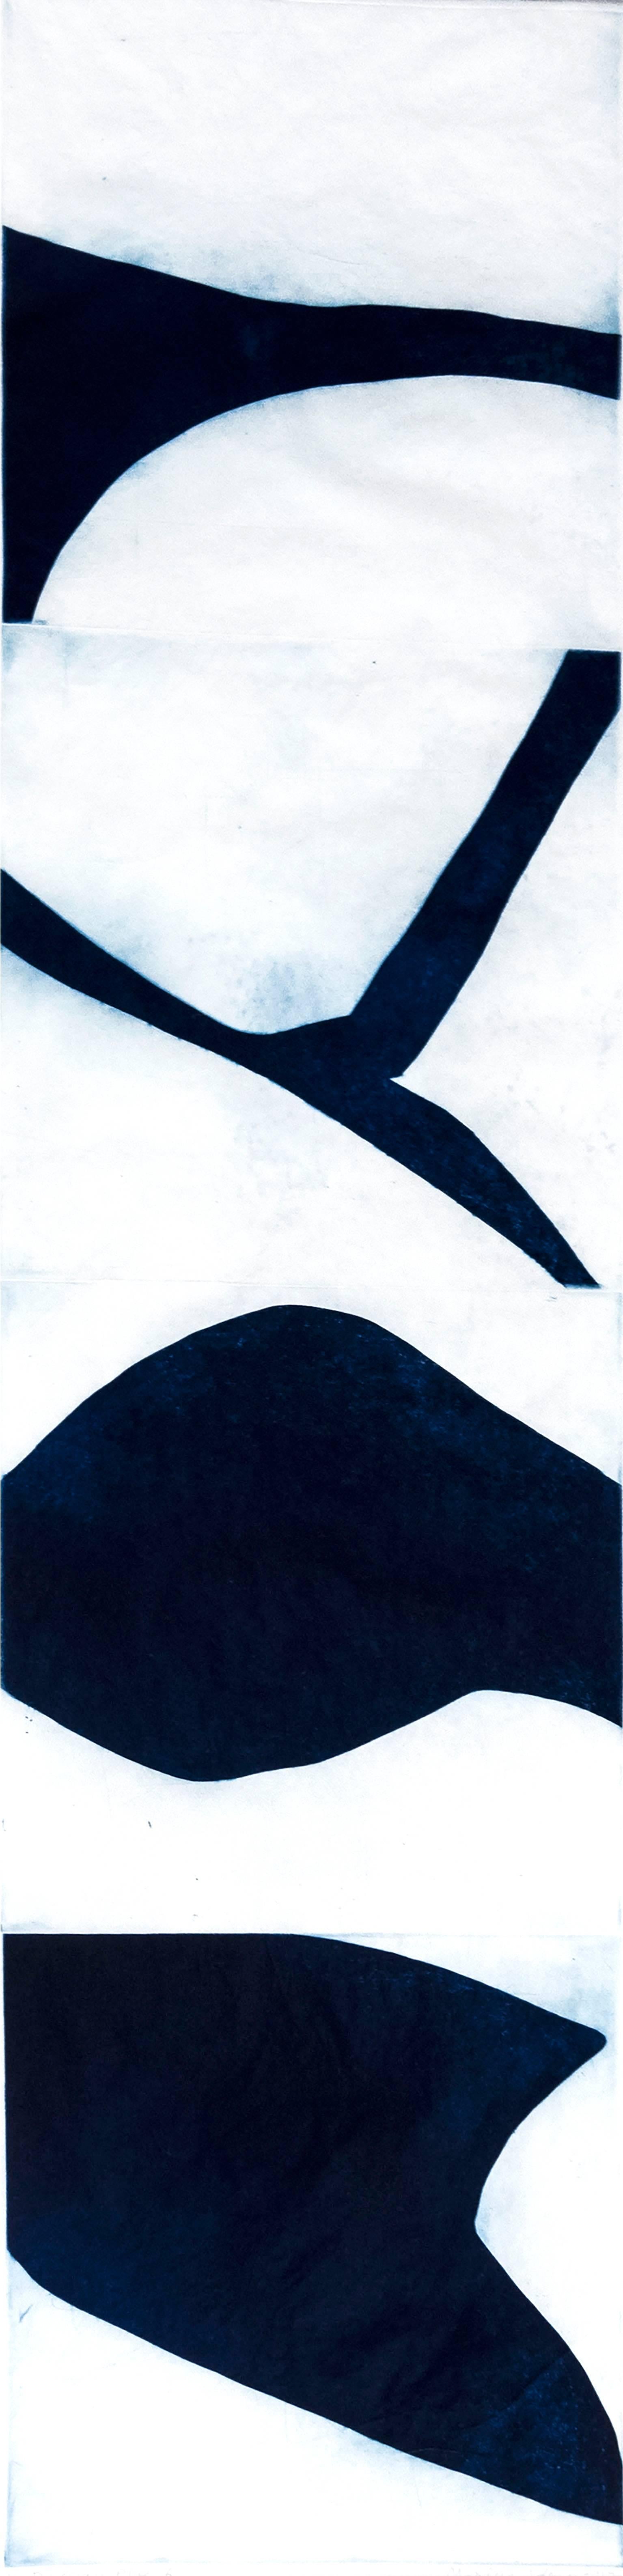 "Prussian Blue Six", graphic aquatint monoprint, Japanese scroll influenced. - Print by Marina Adams